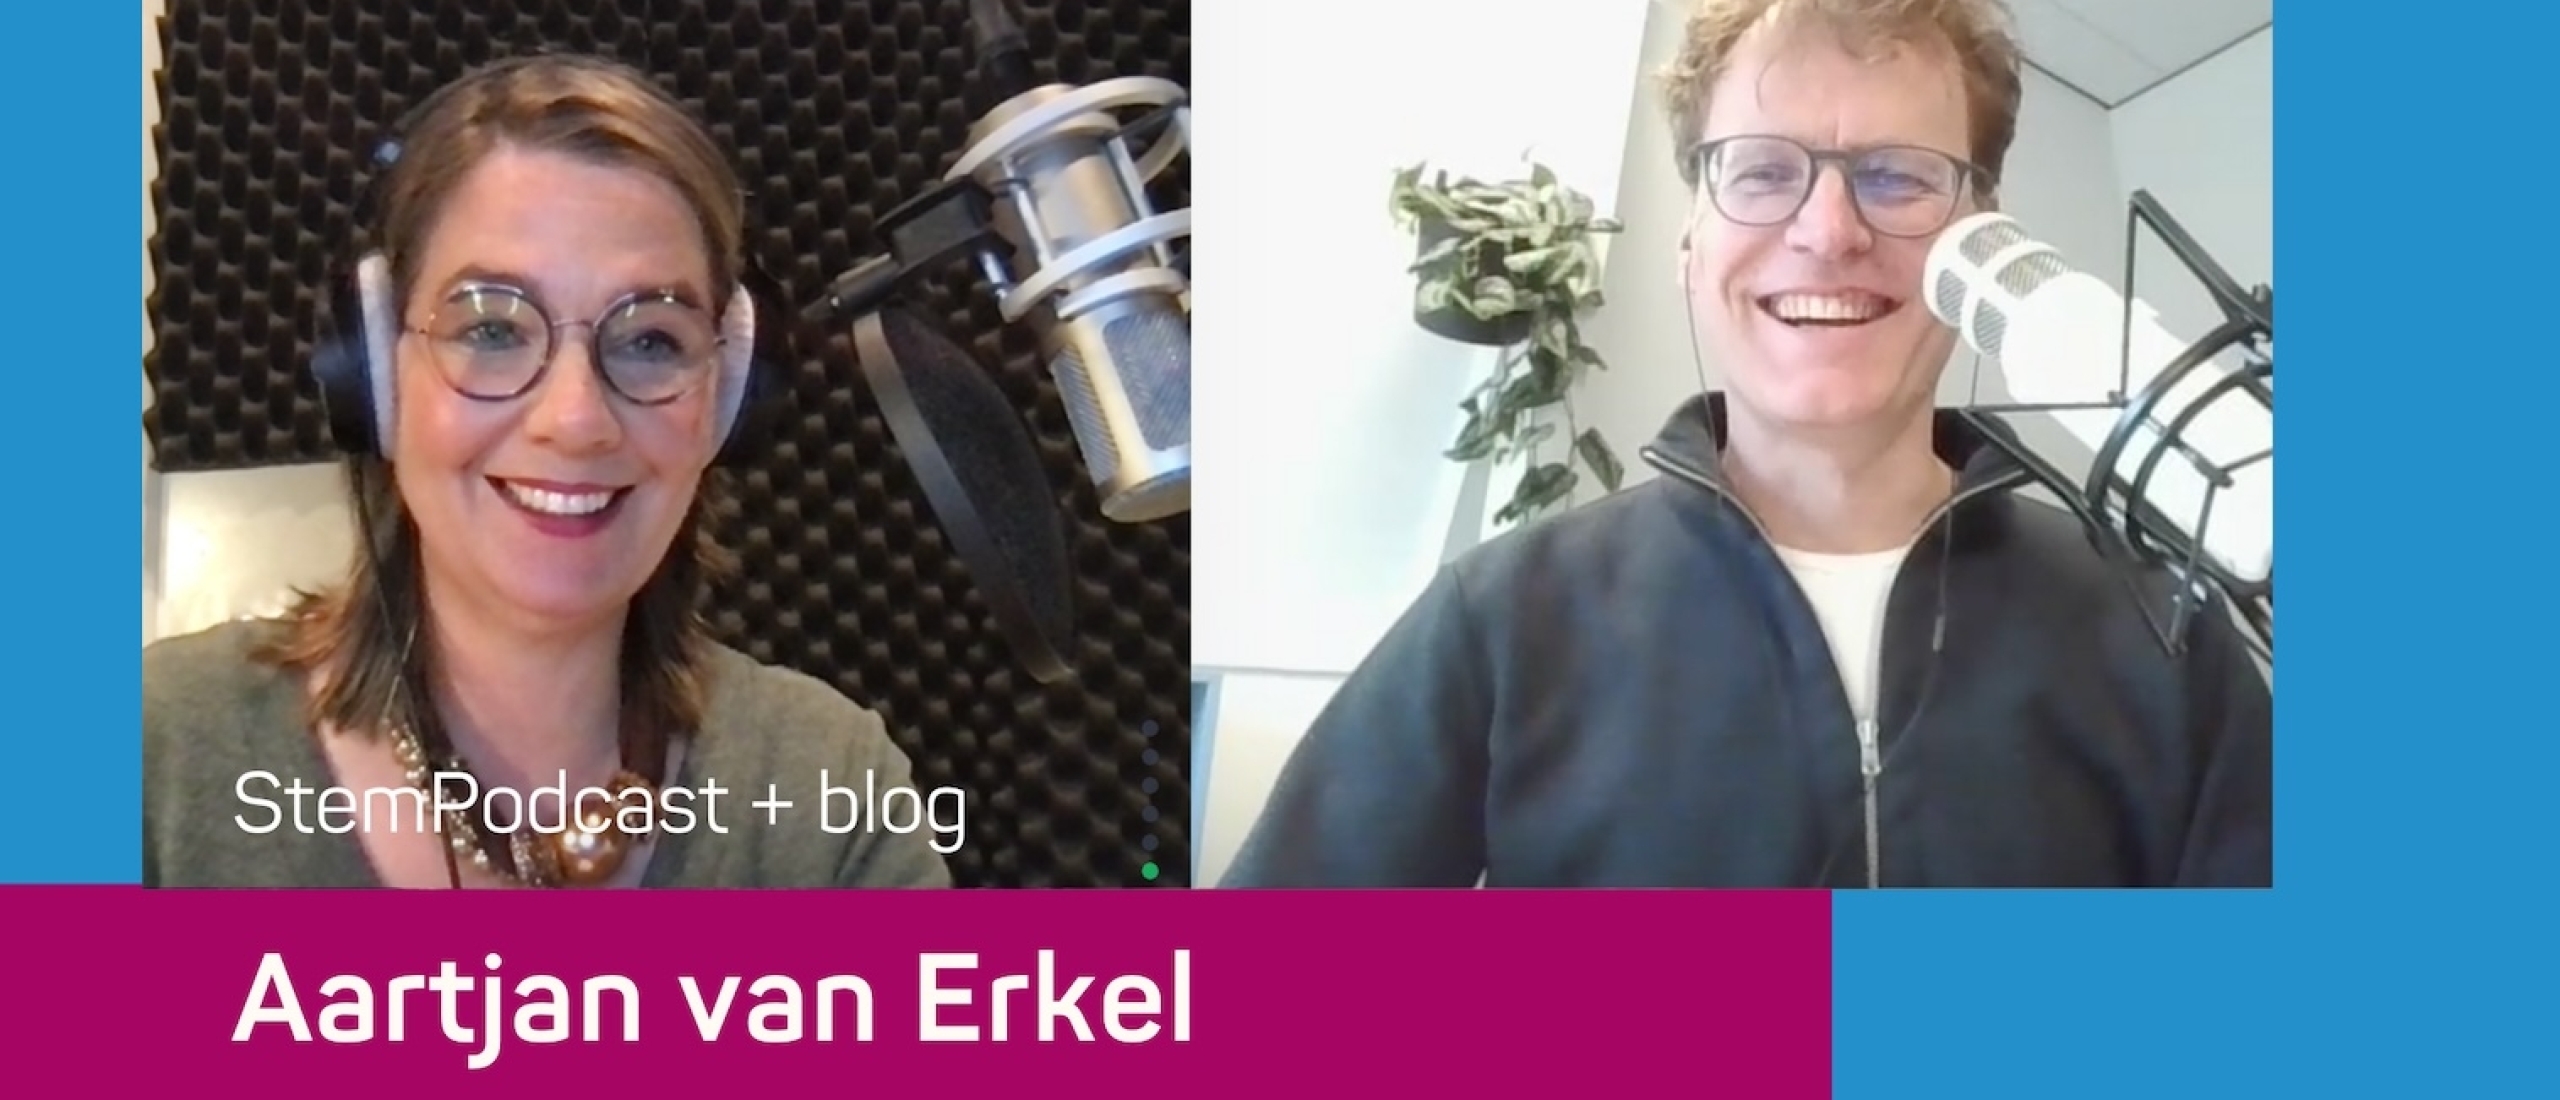 Copywriter Aartjan van Erkel in de StemPodcast: ‘Goed spreken is gewoon in je enthousiasme gaan zitten'